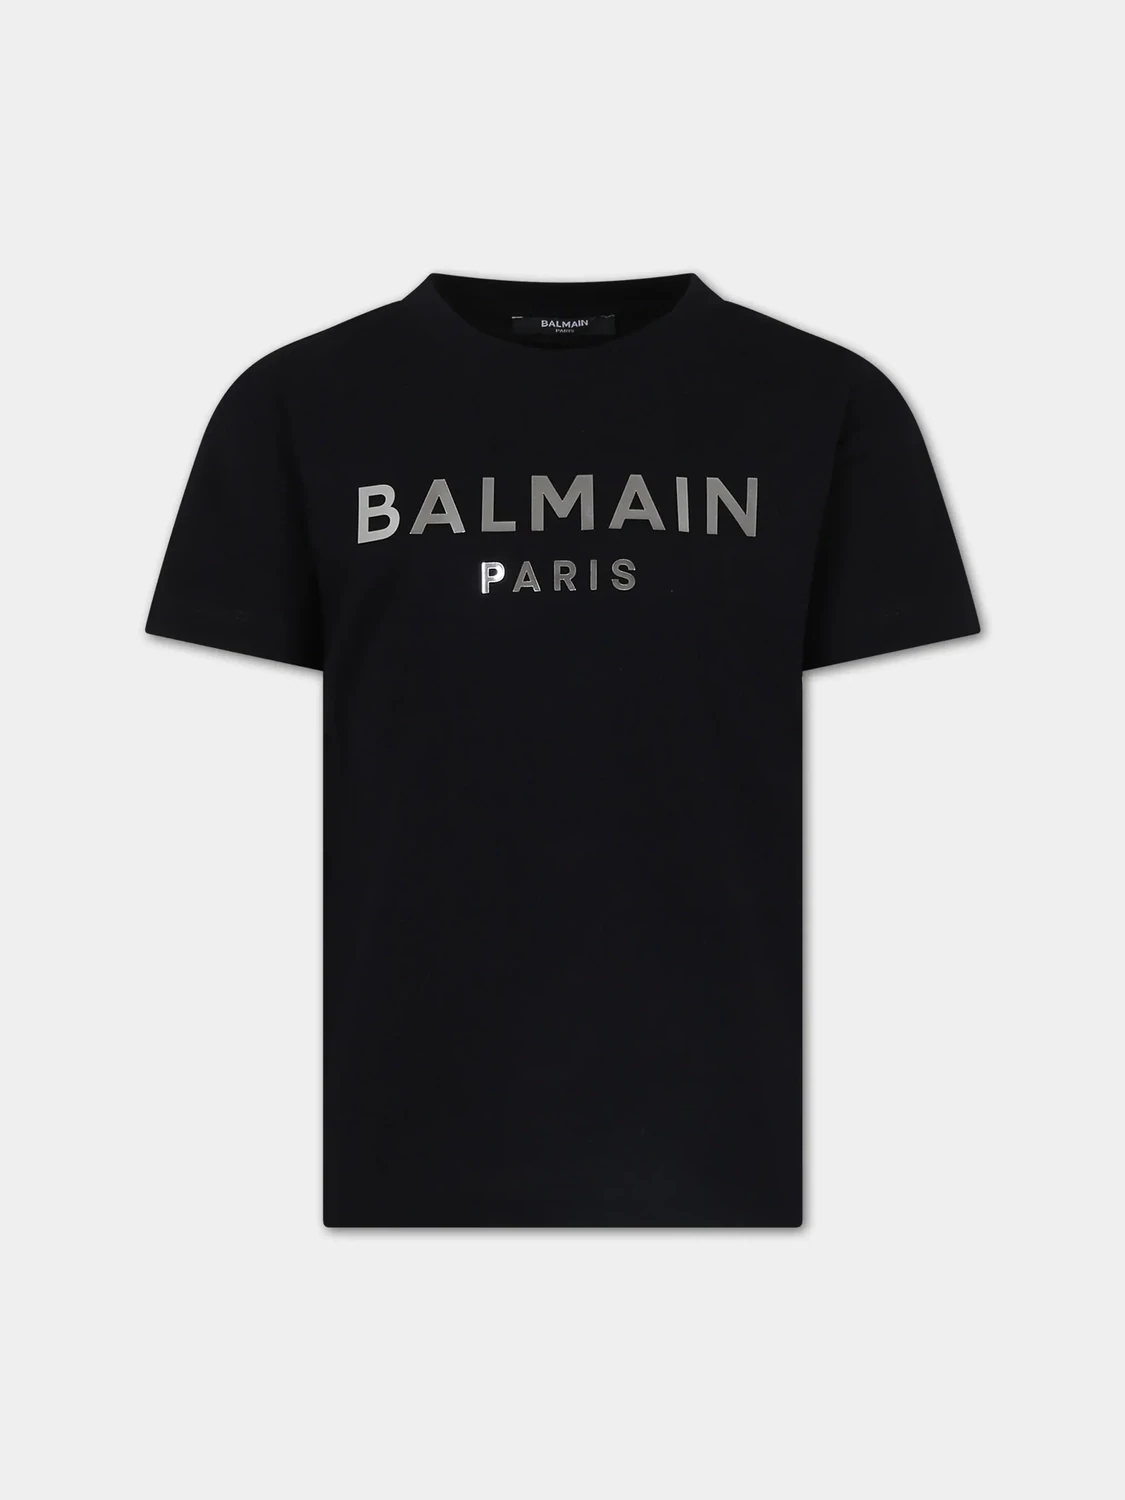 Balmain - T-shirt nera logo metal argento, Size: 13 anni